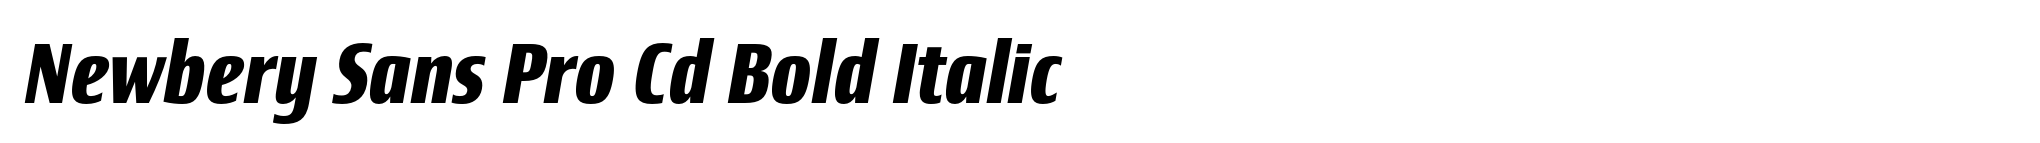 Newbery Sans Pro Cd Bold Italic image